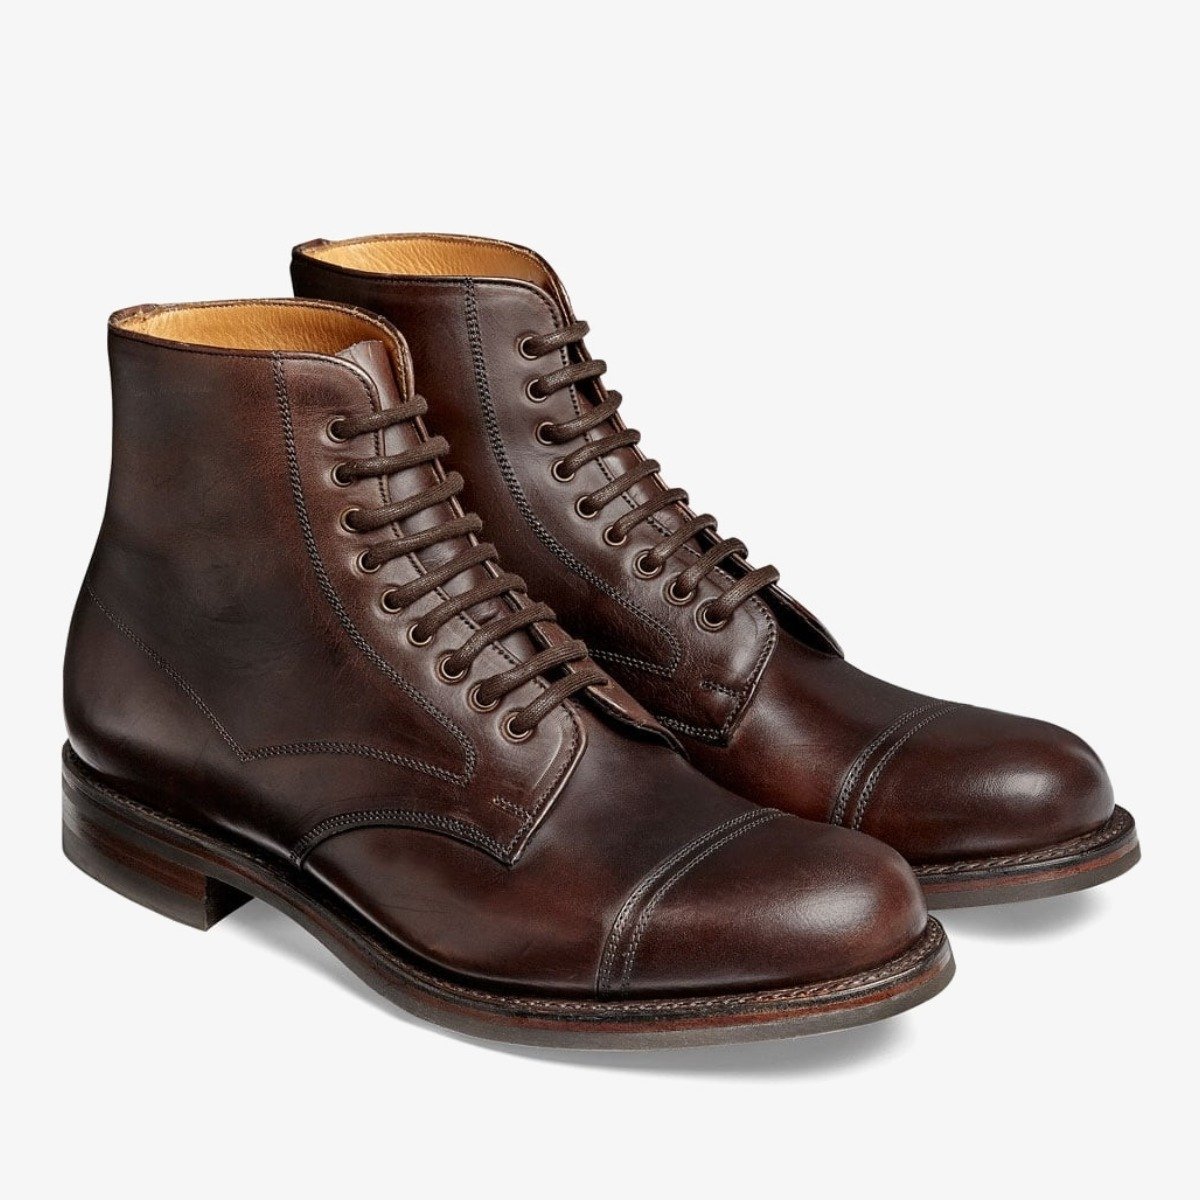 Rugged boots - top 5 men's autumn winter boots